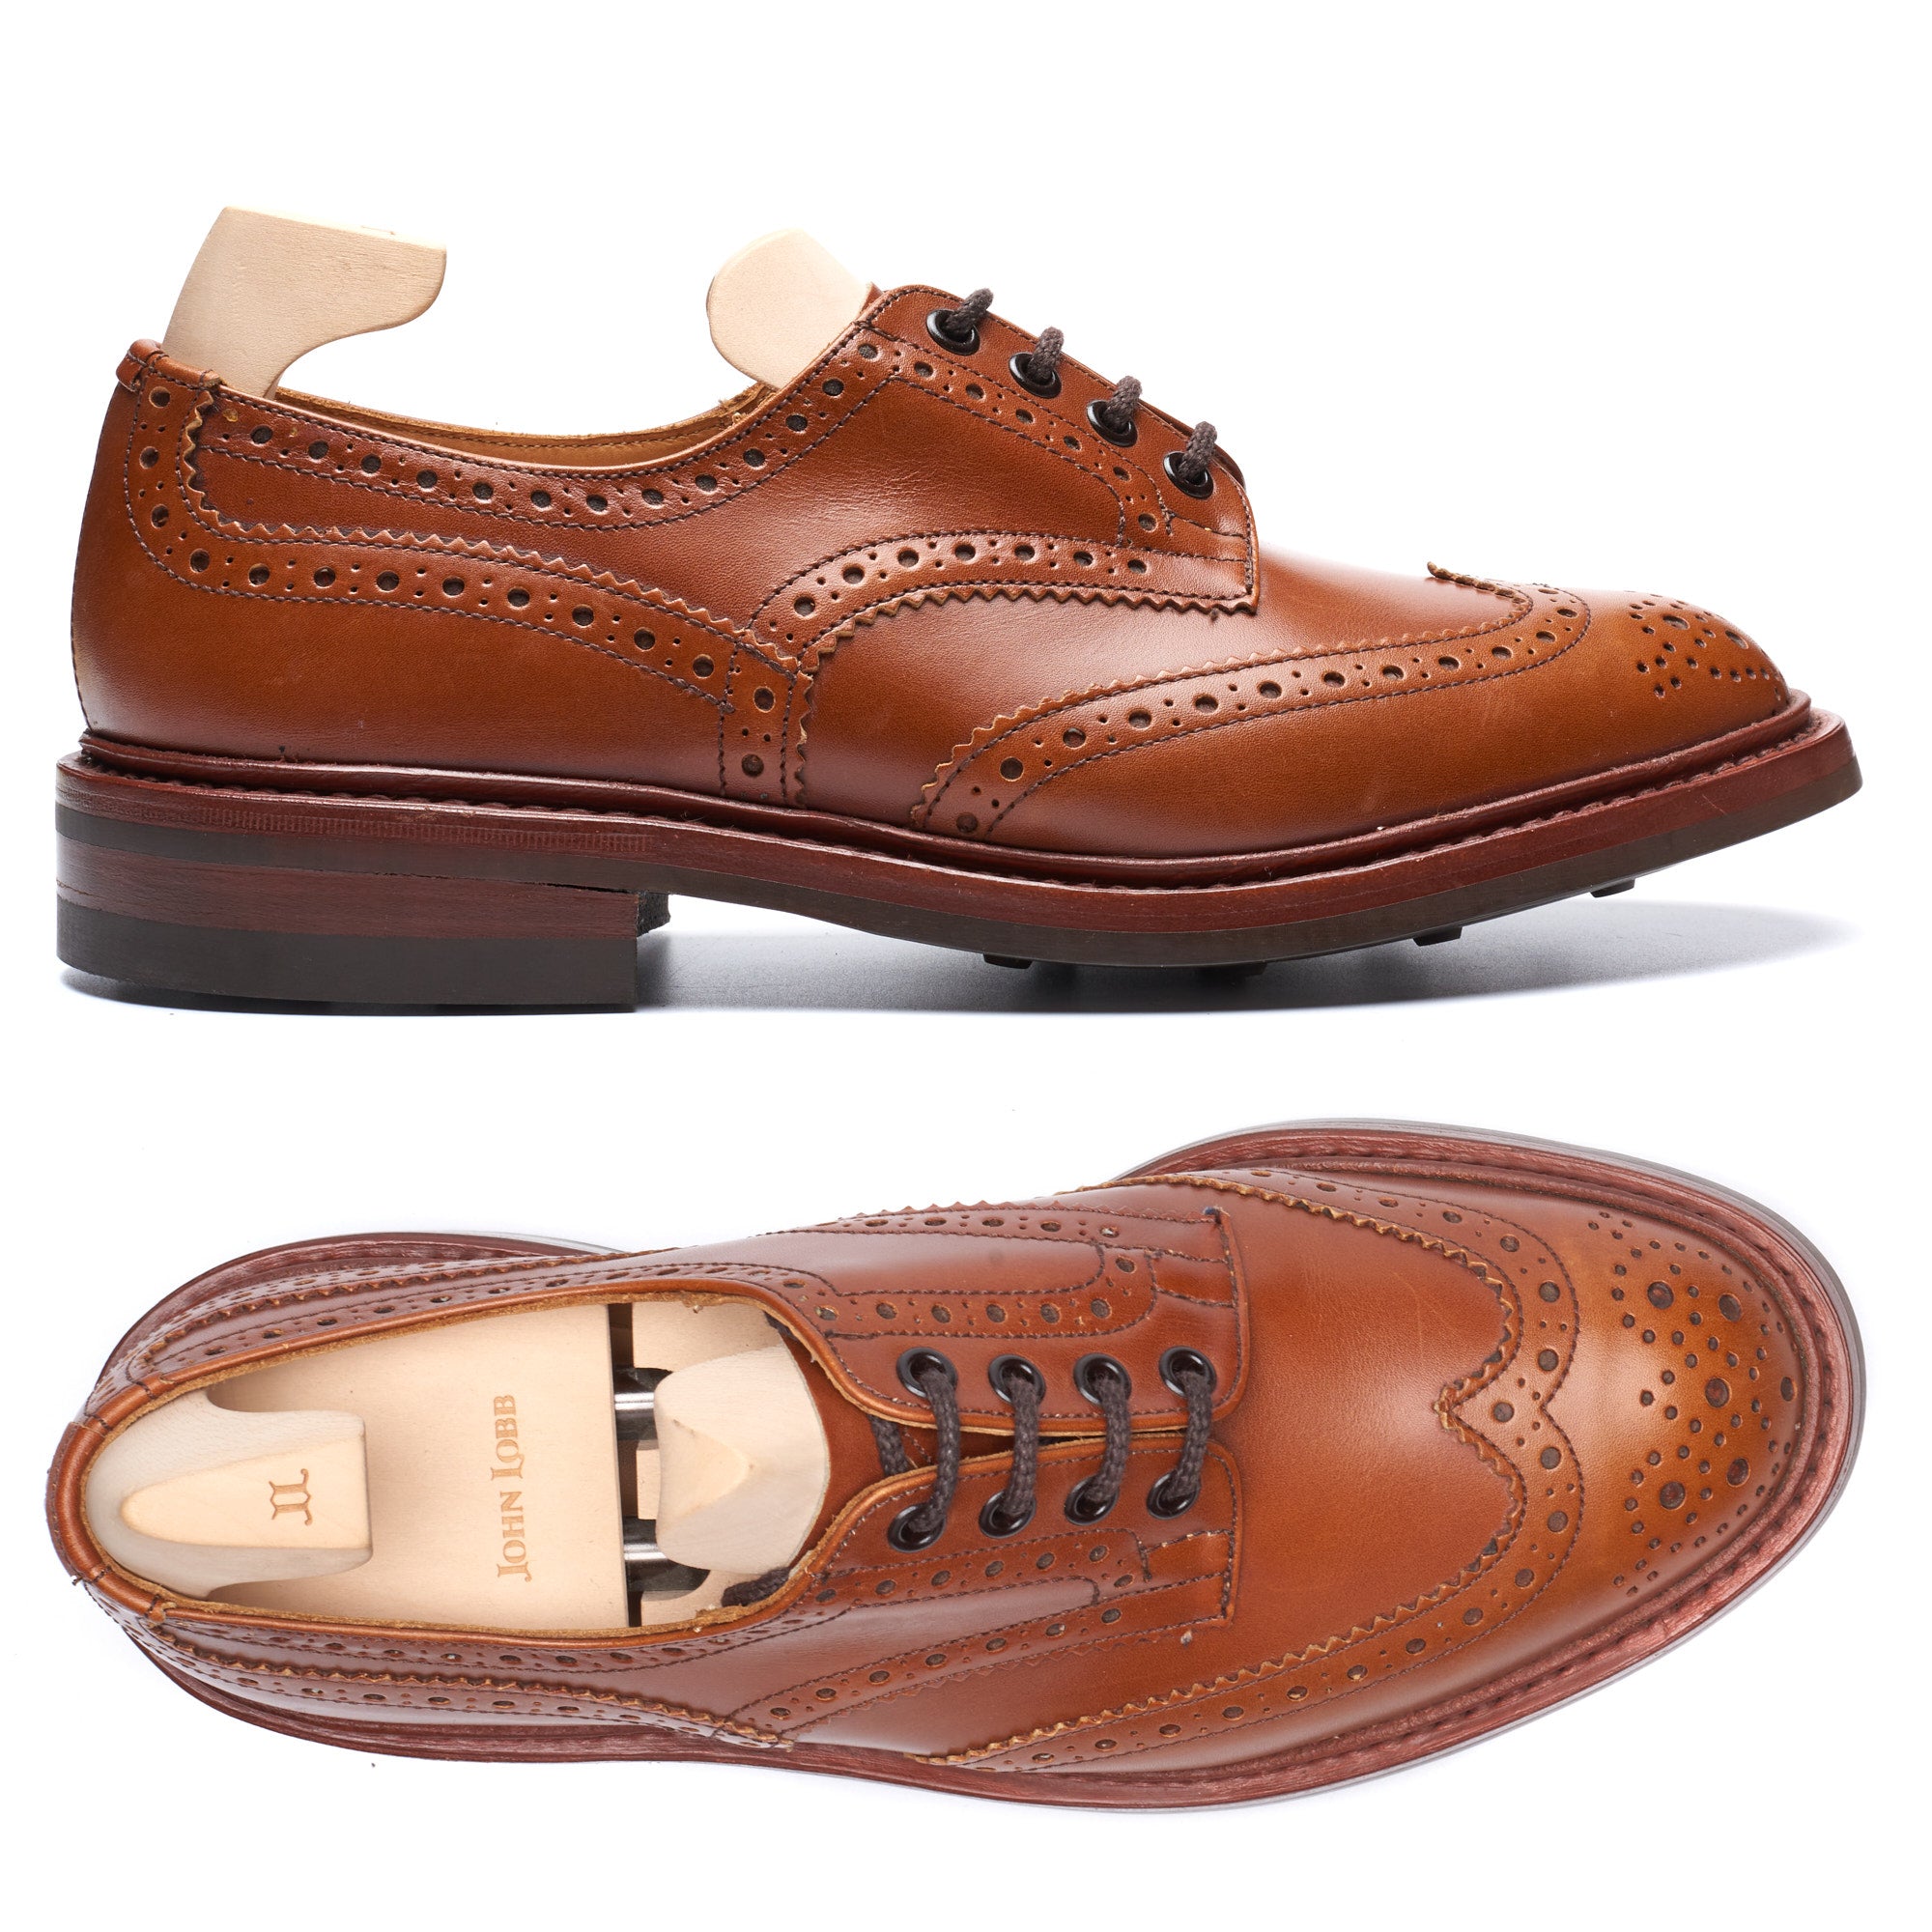 TRICKER'S Bourton Tan Brogue Wingtip Derby Shoes Dainite Sole UK 7.5 US 8.5 NEW